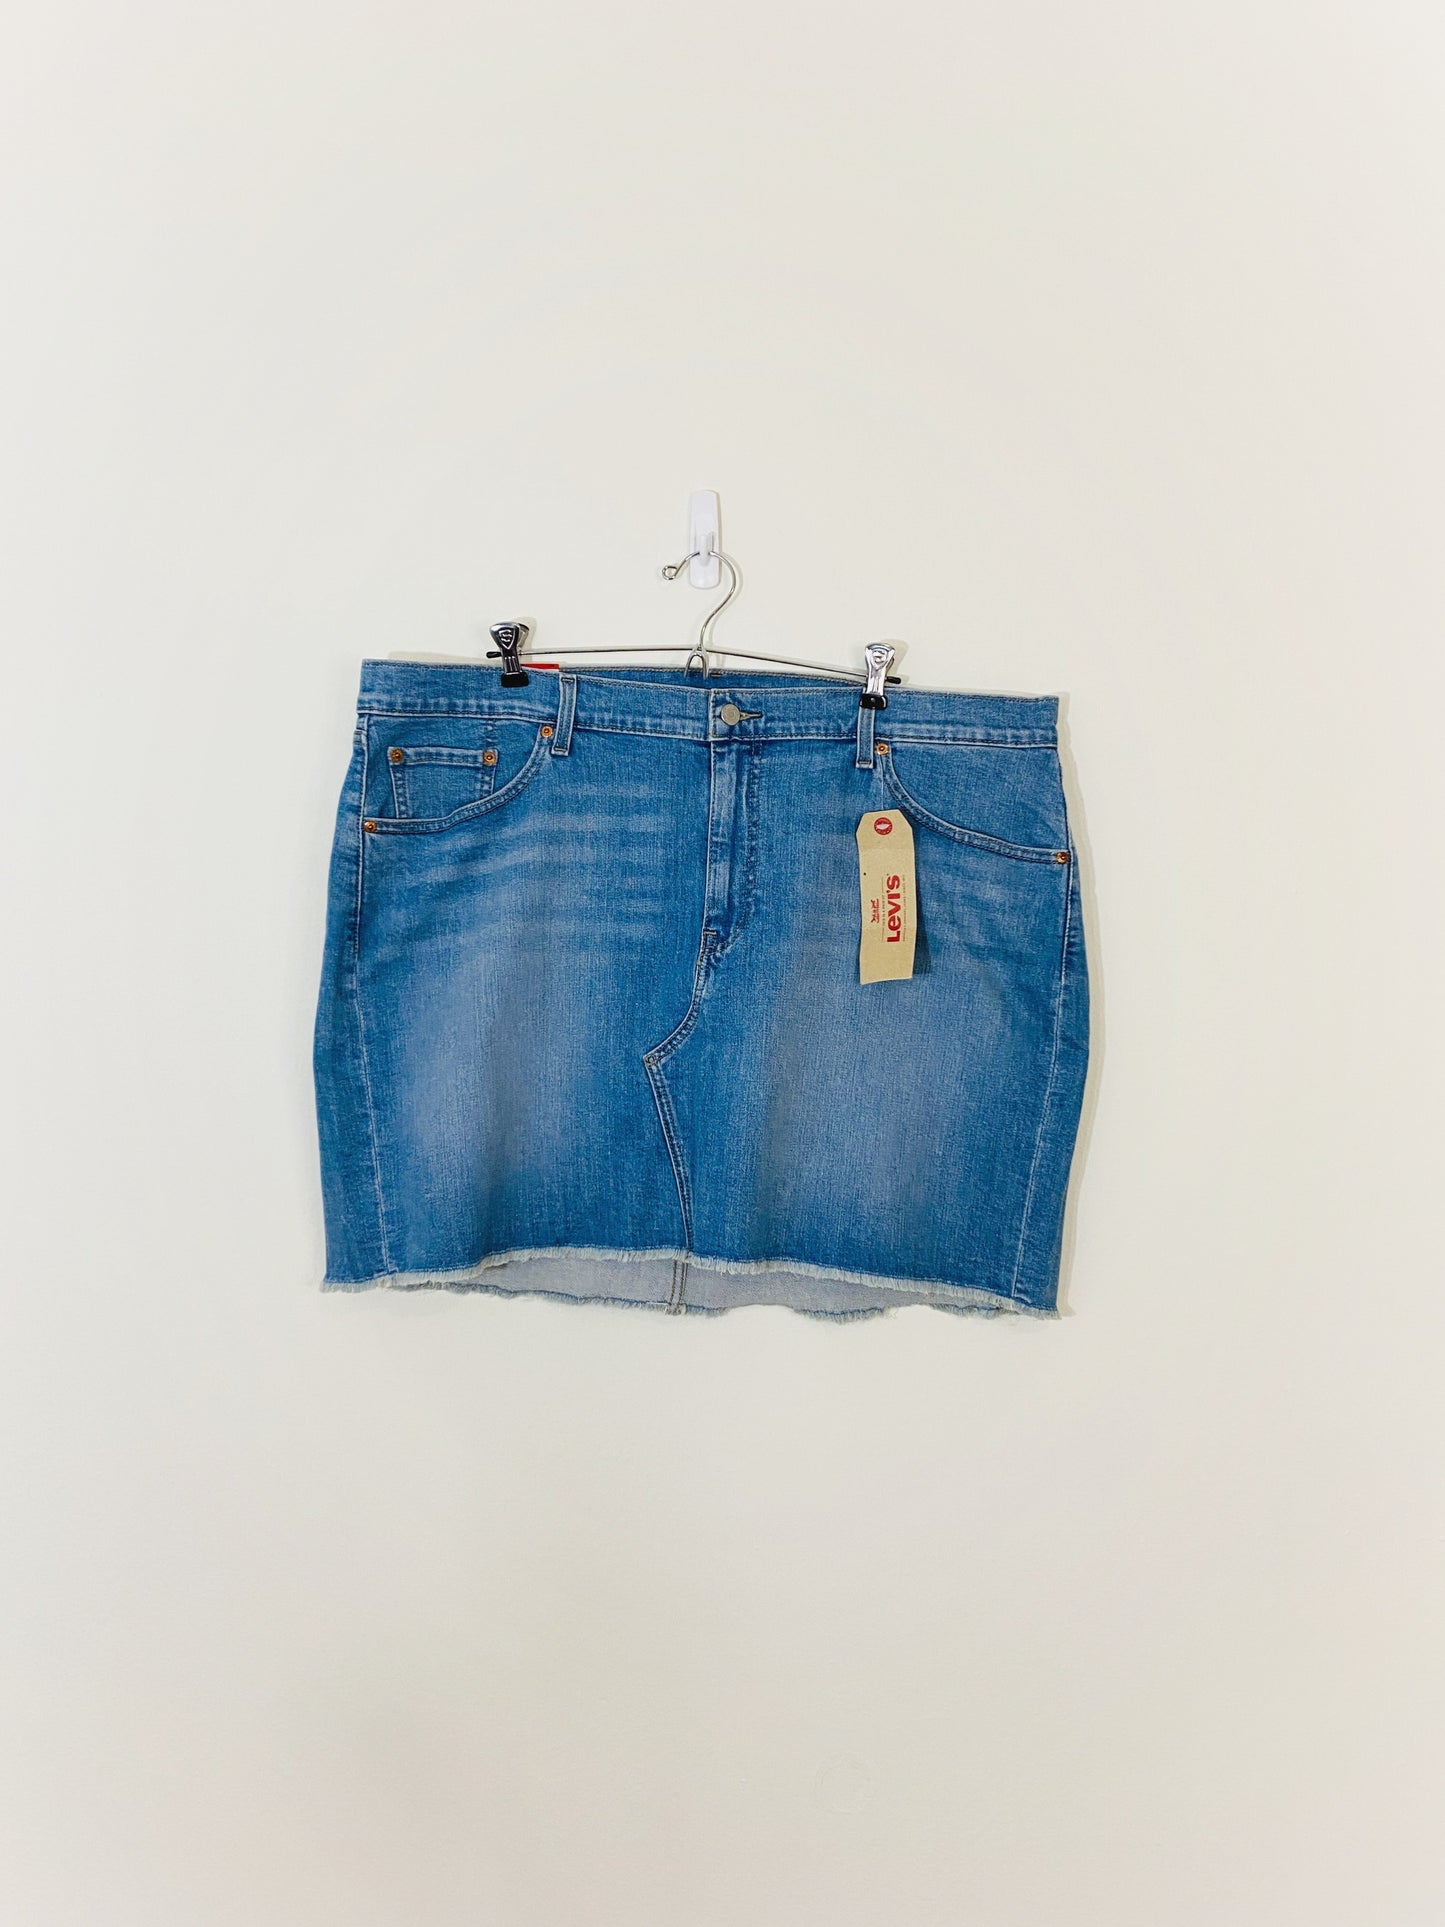 Jean Mini Skirt (Size 22)